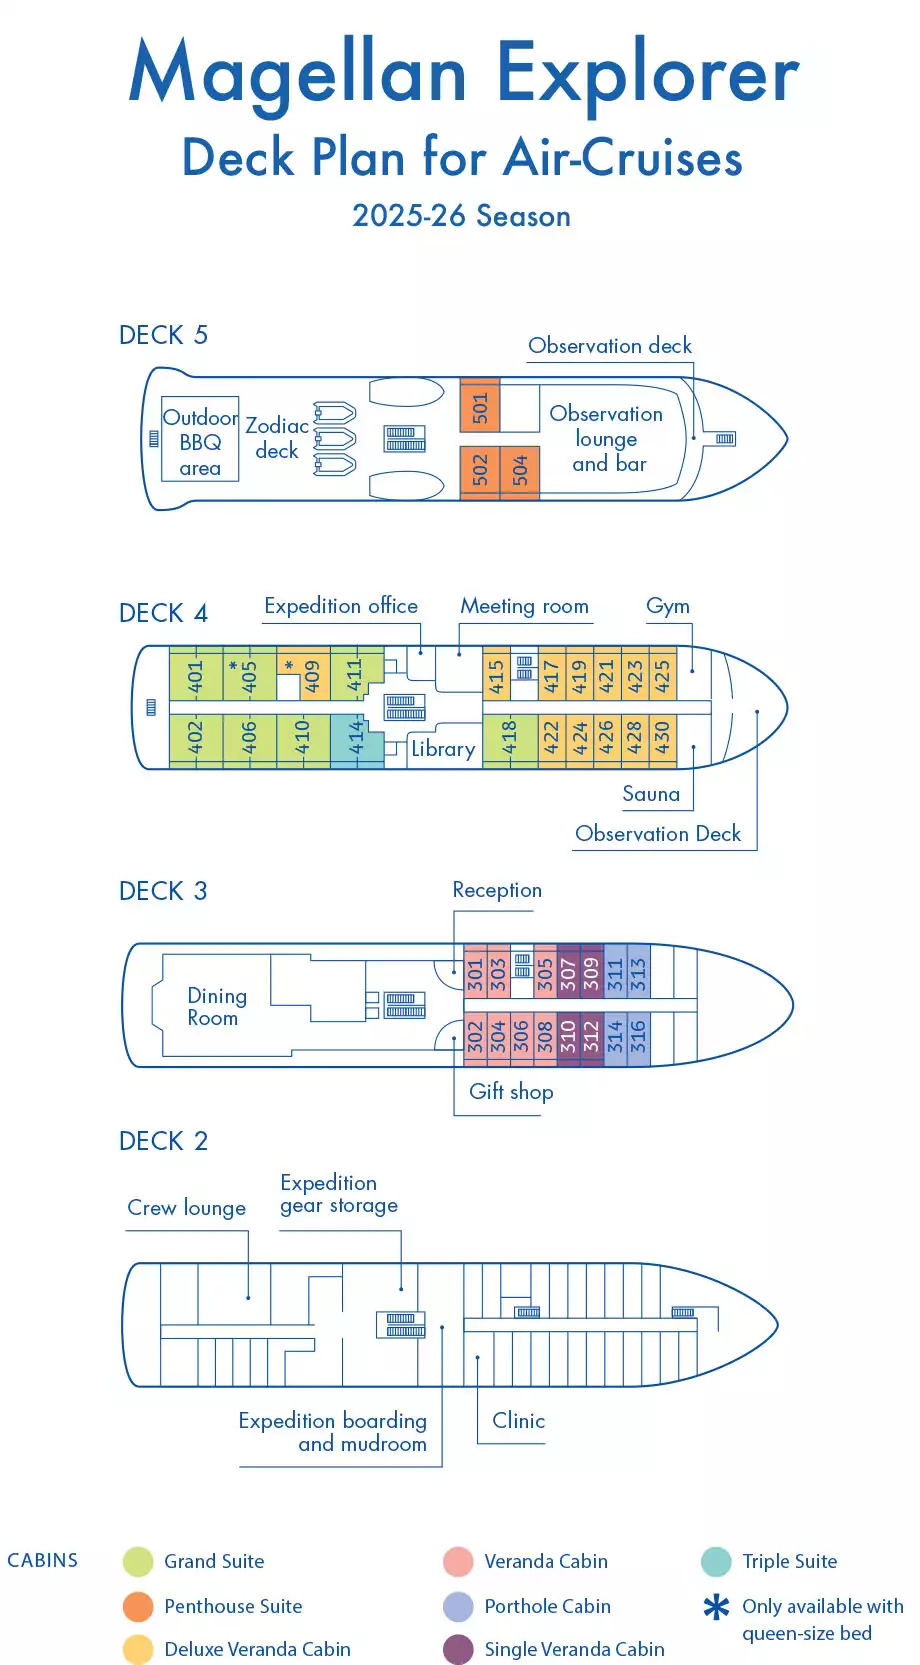 2025-2026 air cruises deck plan for polar ship Magellan Explorer, showing capacity for 76 guests across 3 decks.